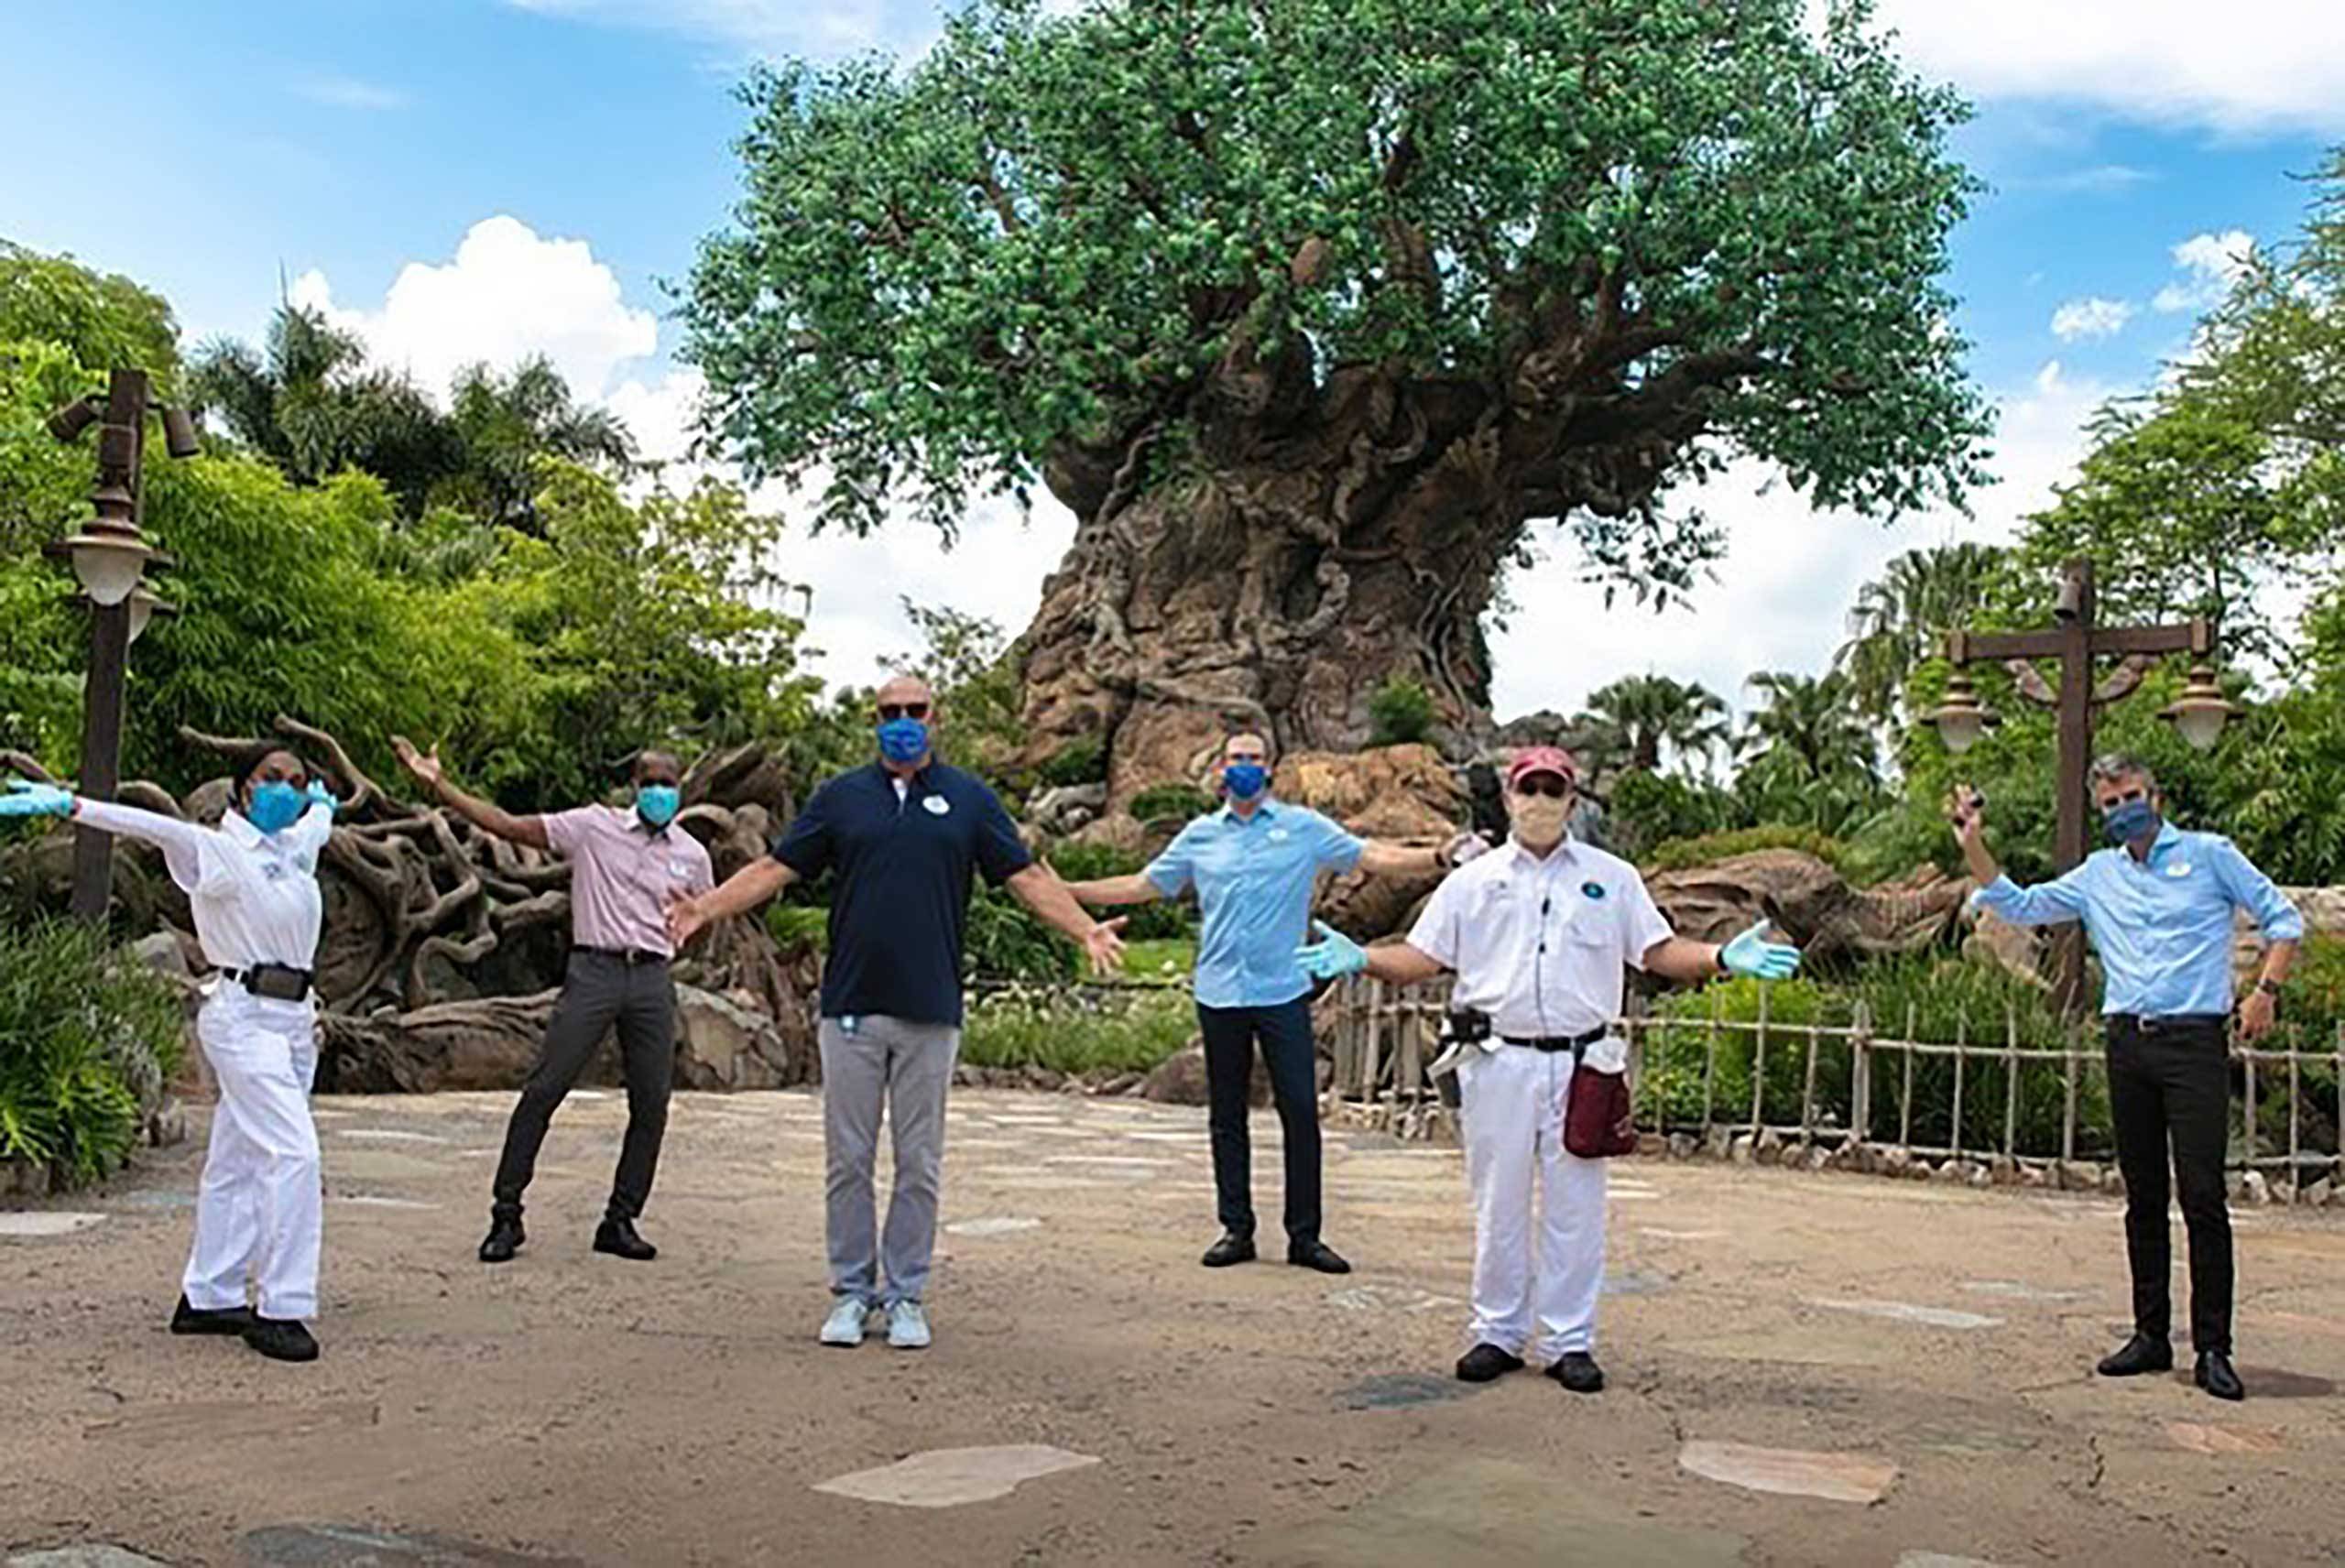 Walt Disney Co. executives visit Walt Disney World to celebrate reopening